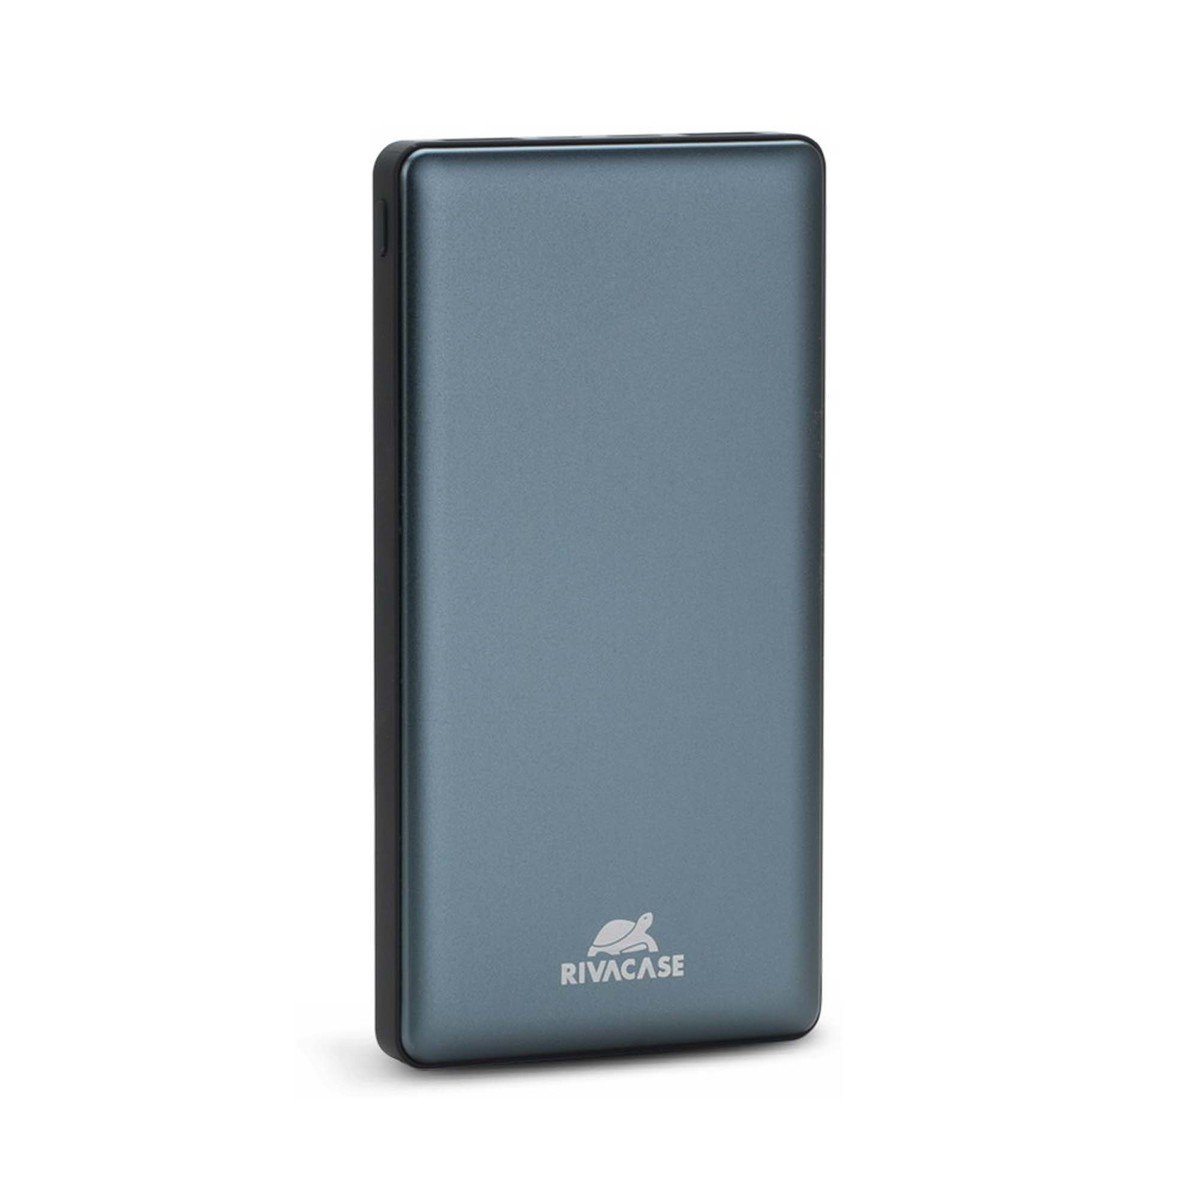 Rivacase VA1210 (10 000mAh) portable rechargeable battery